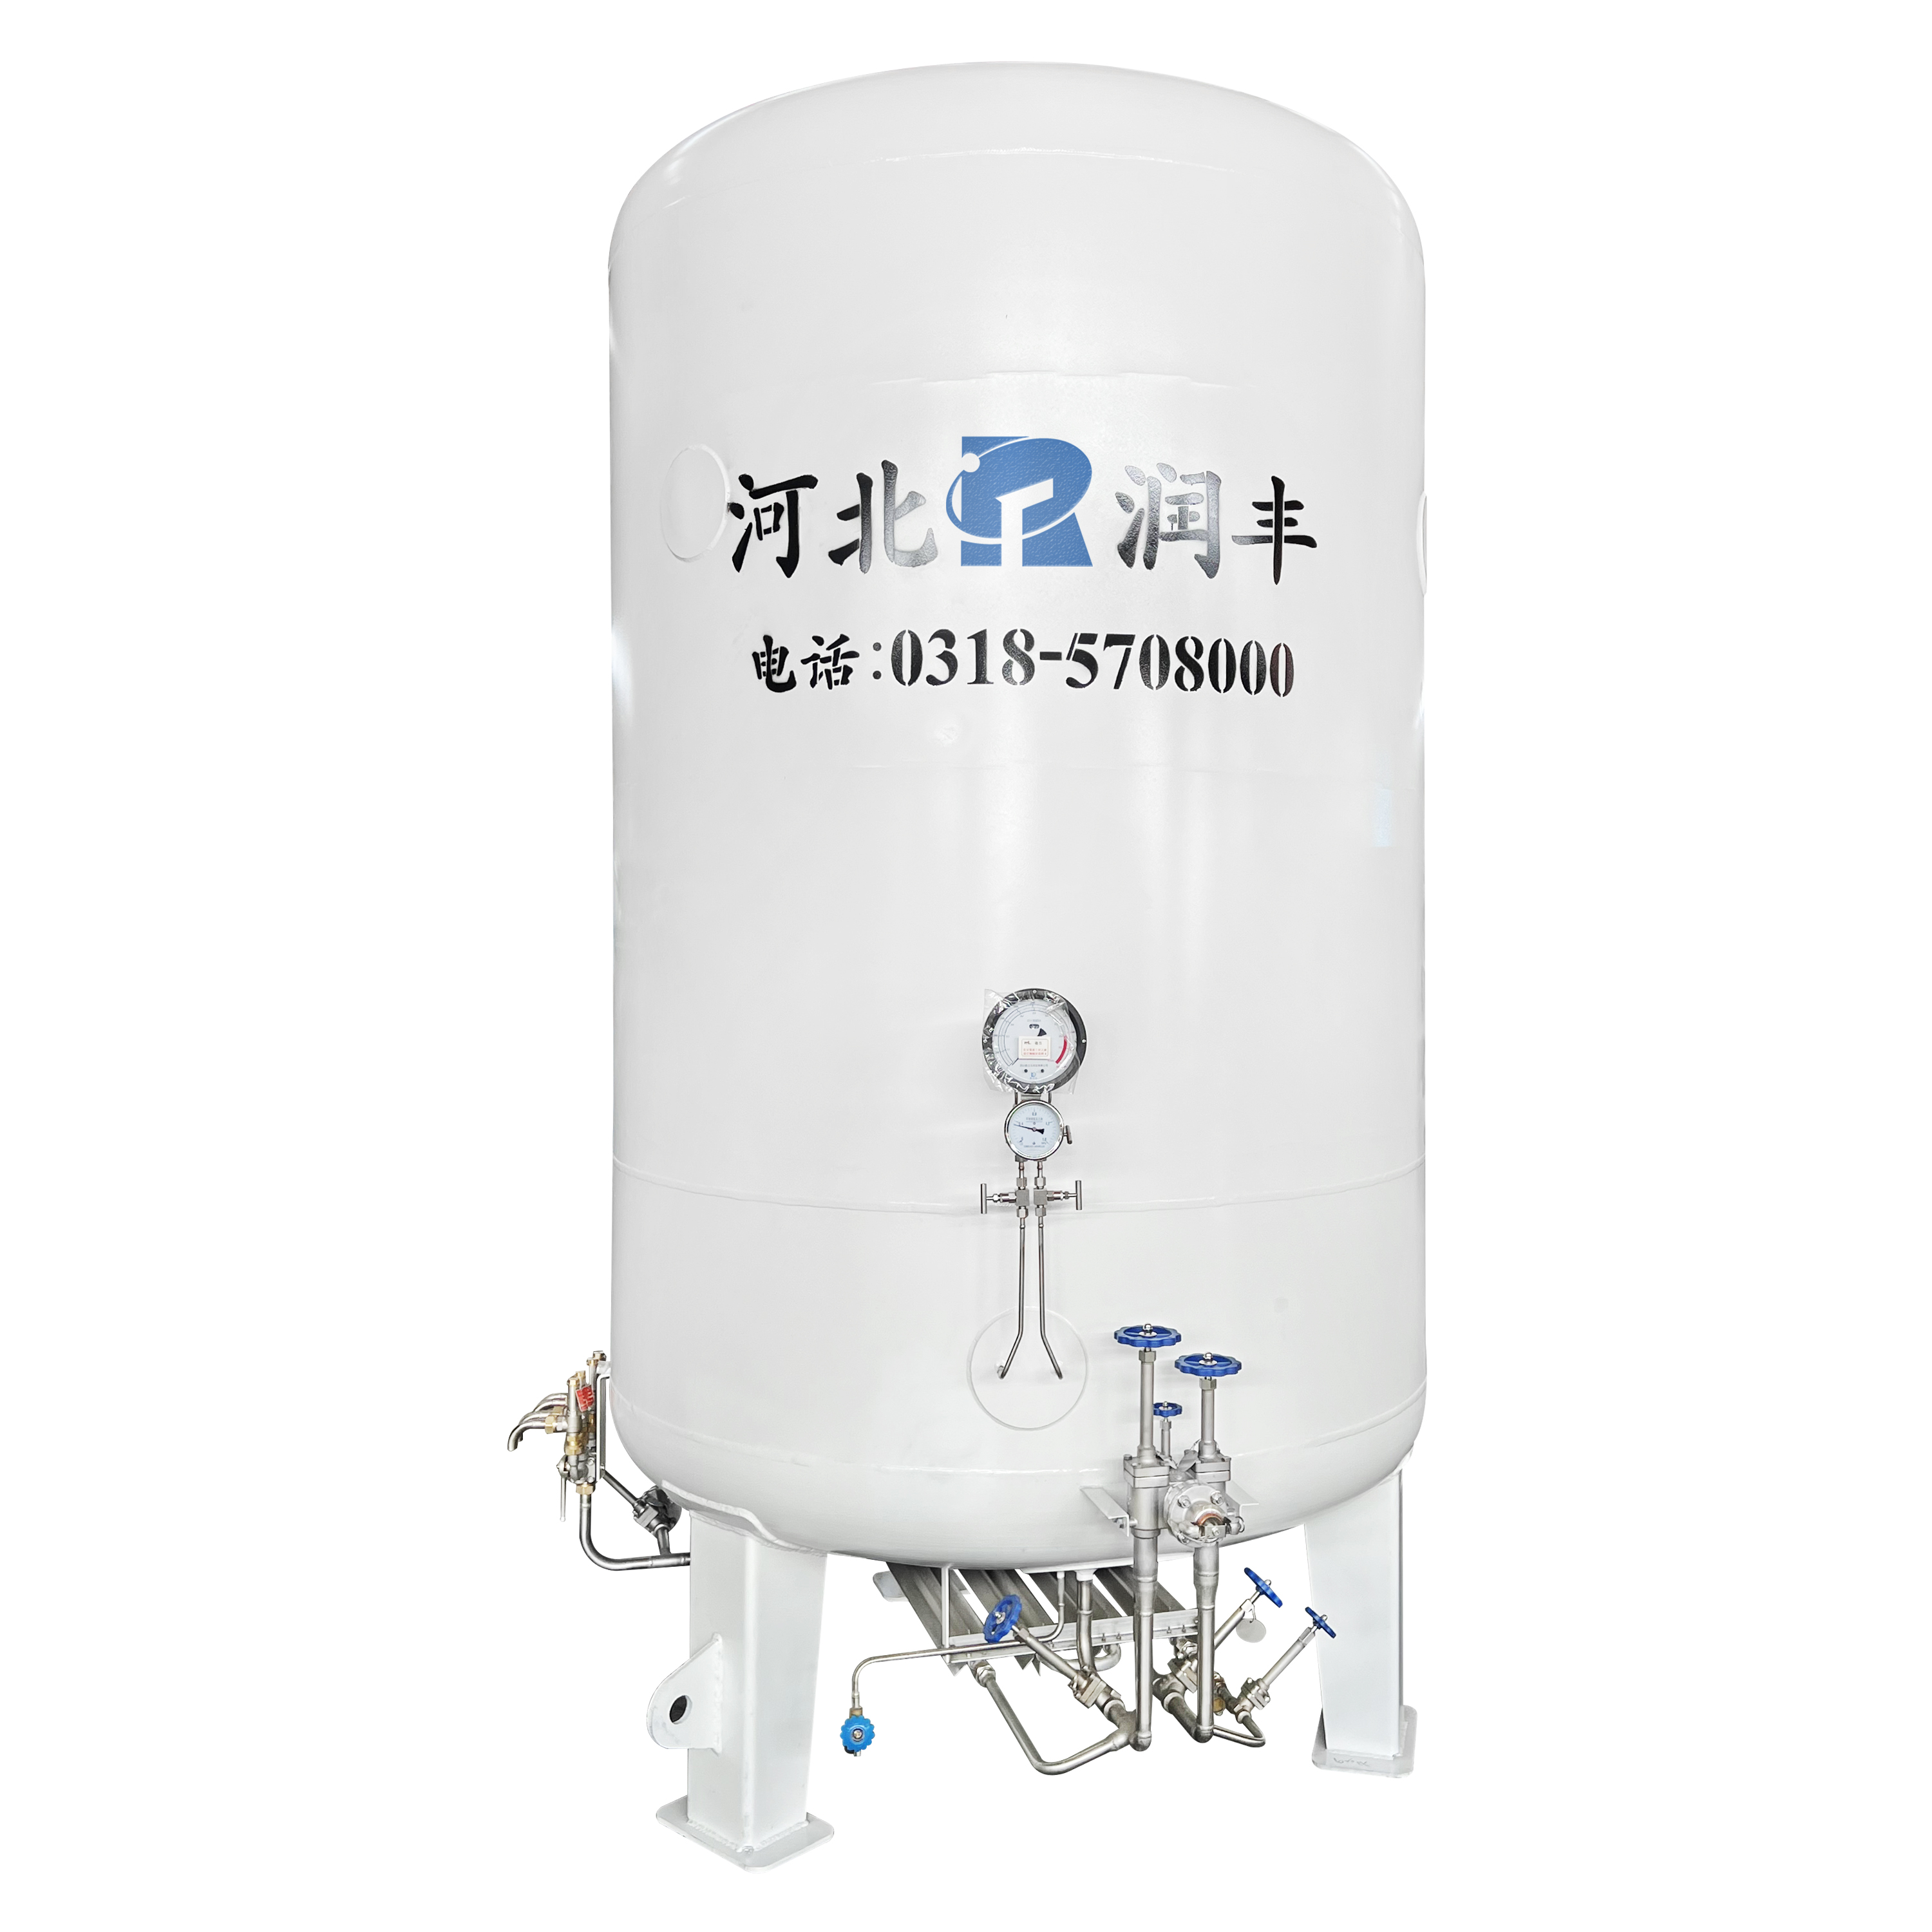 China Cheap price Cryogenic Storage Tanks - Vertical Storage Tank – Runfeng